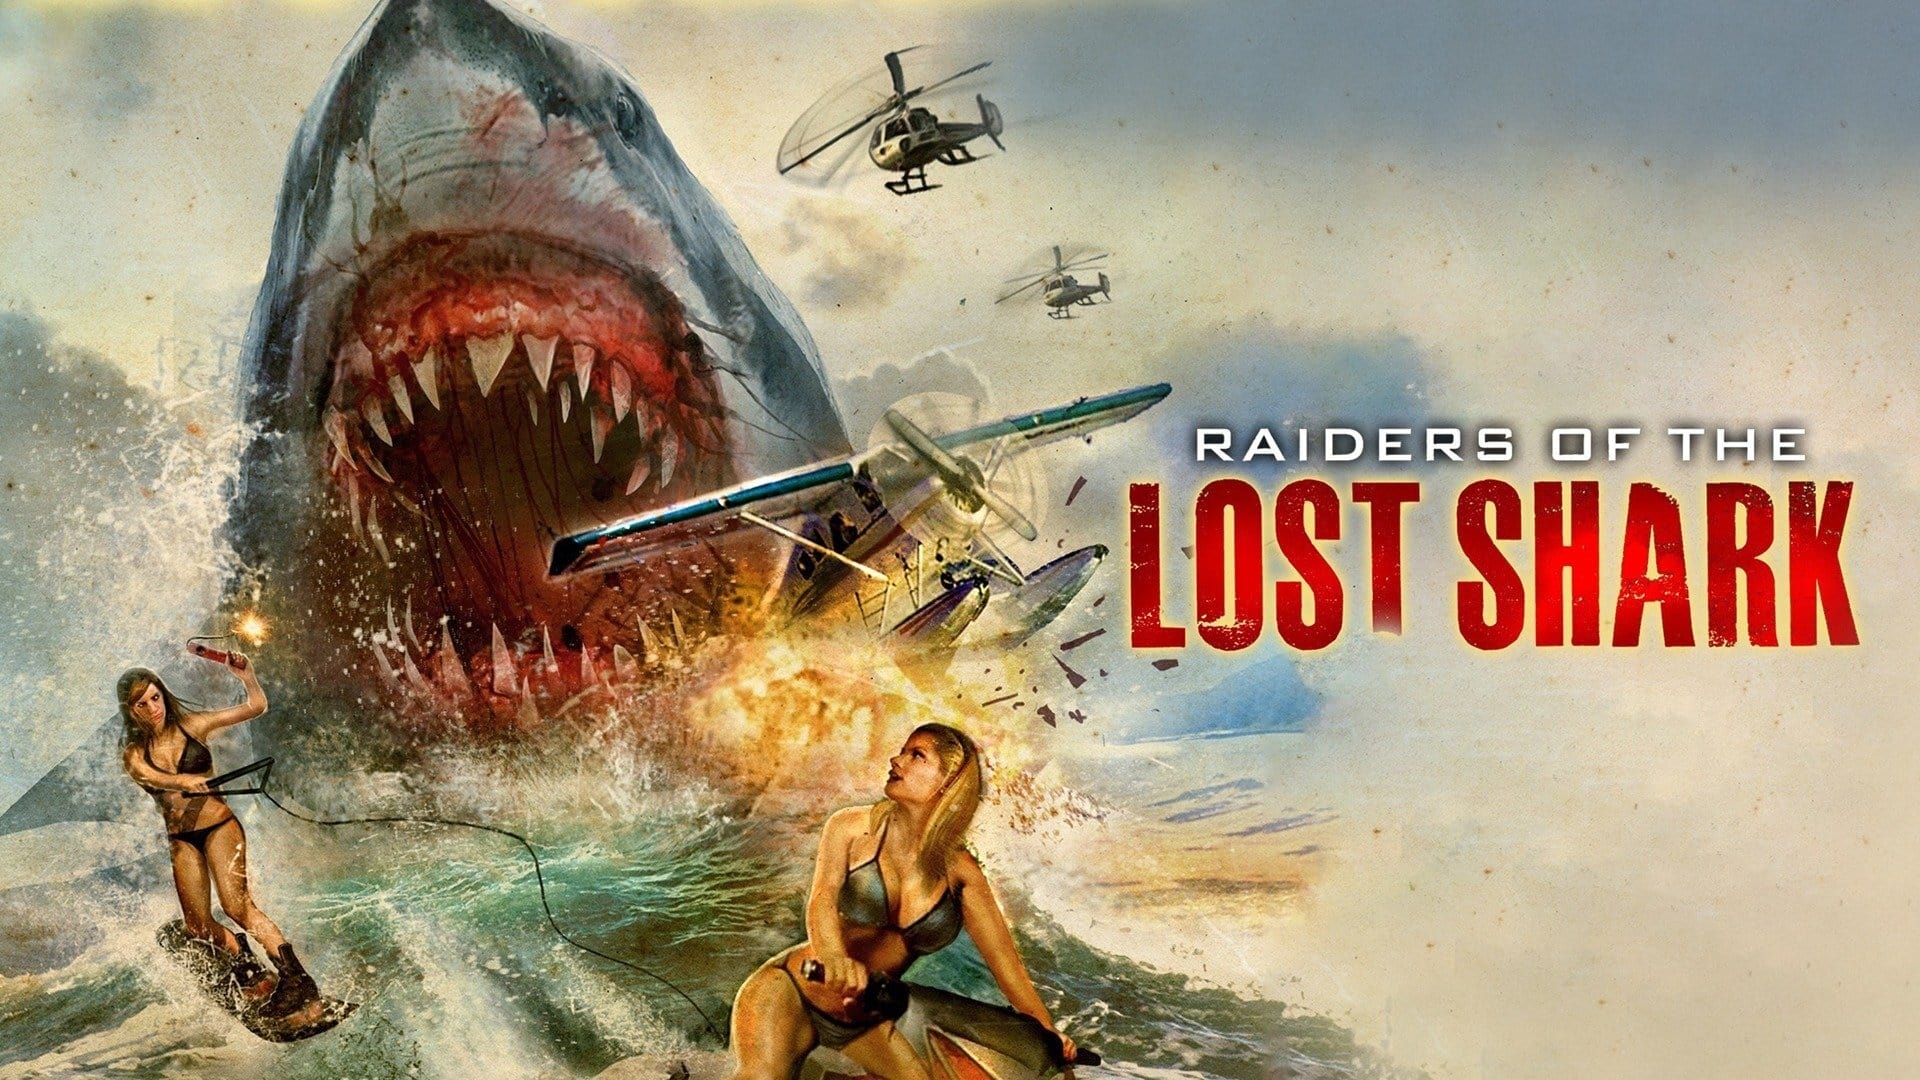 Raiders of the Lost Shark (2015)